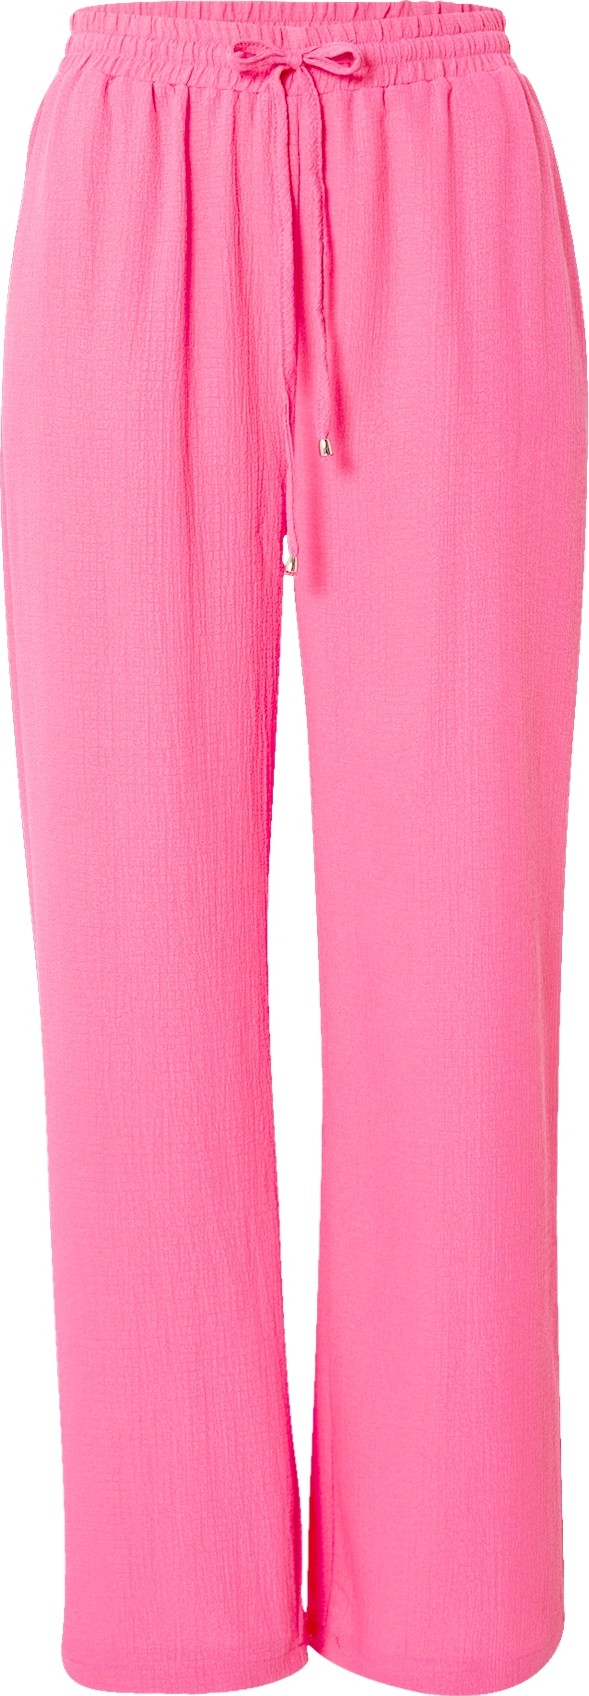 SISTERS POINT Kalhoty 'VARIA' pink